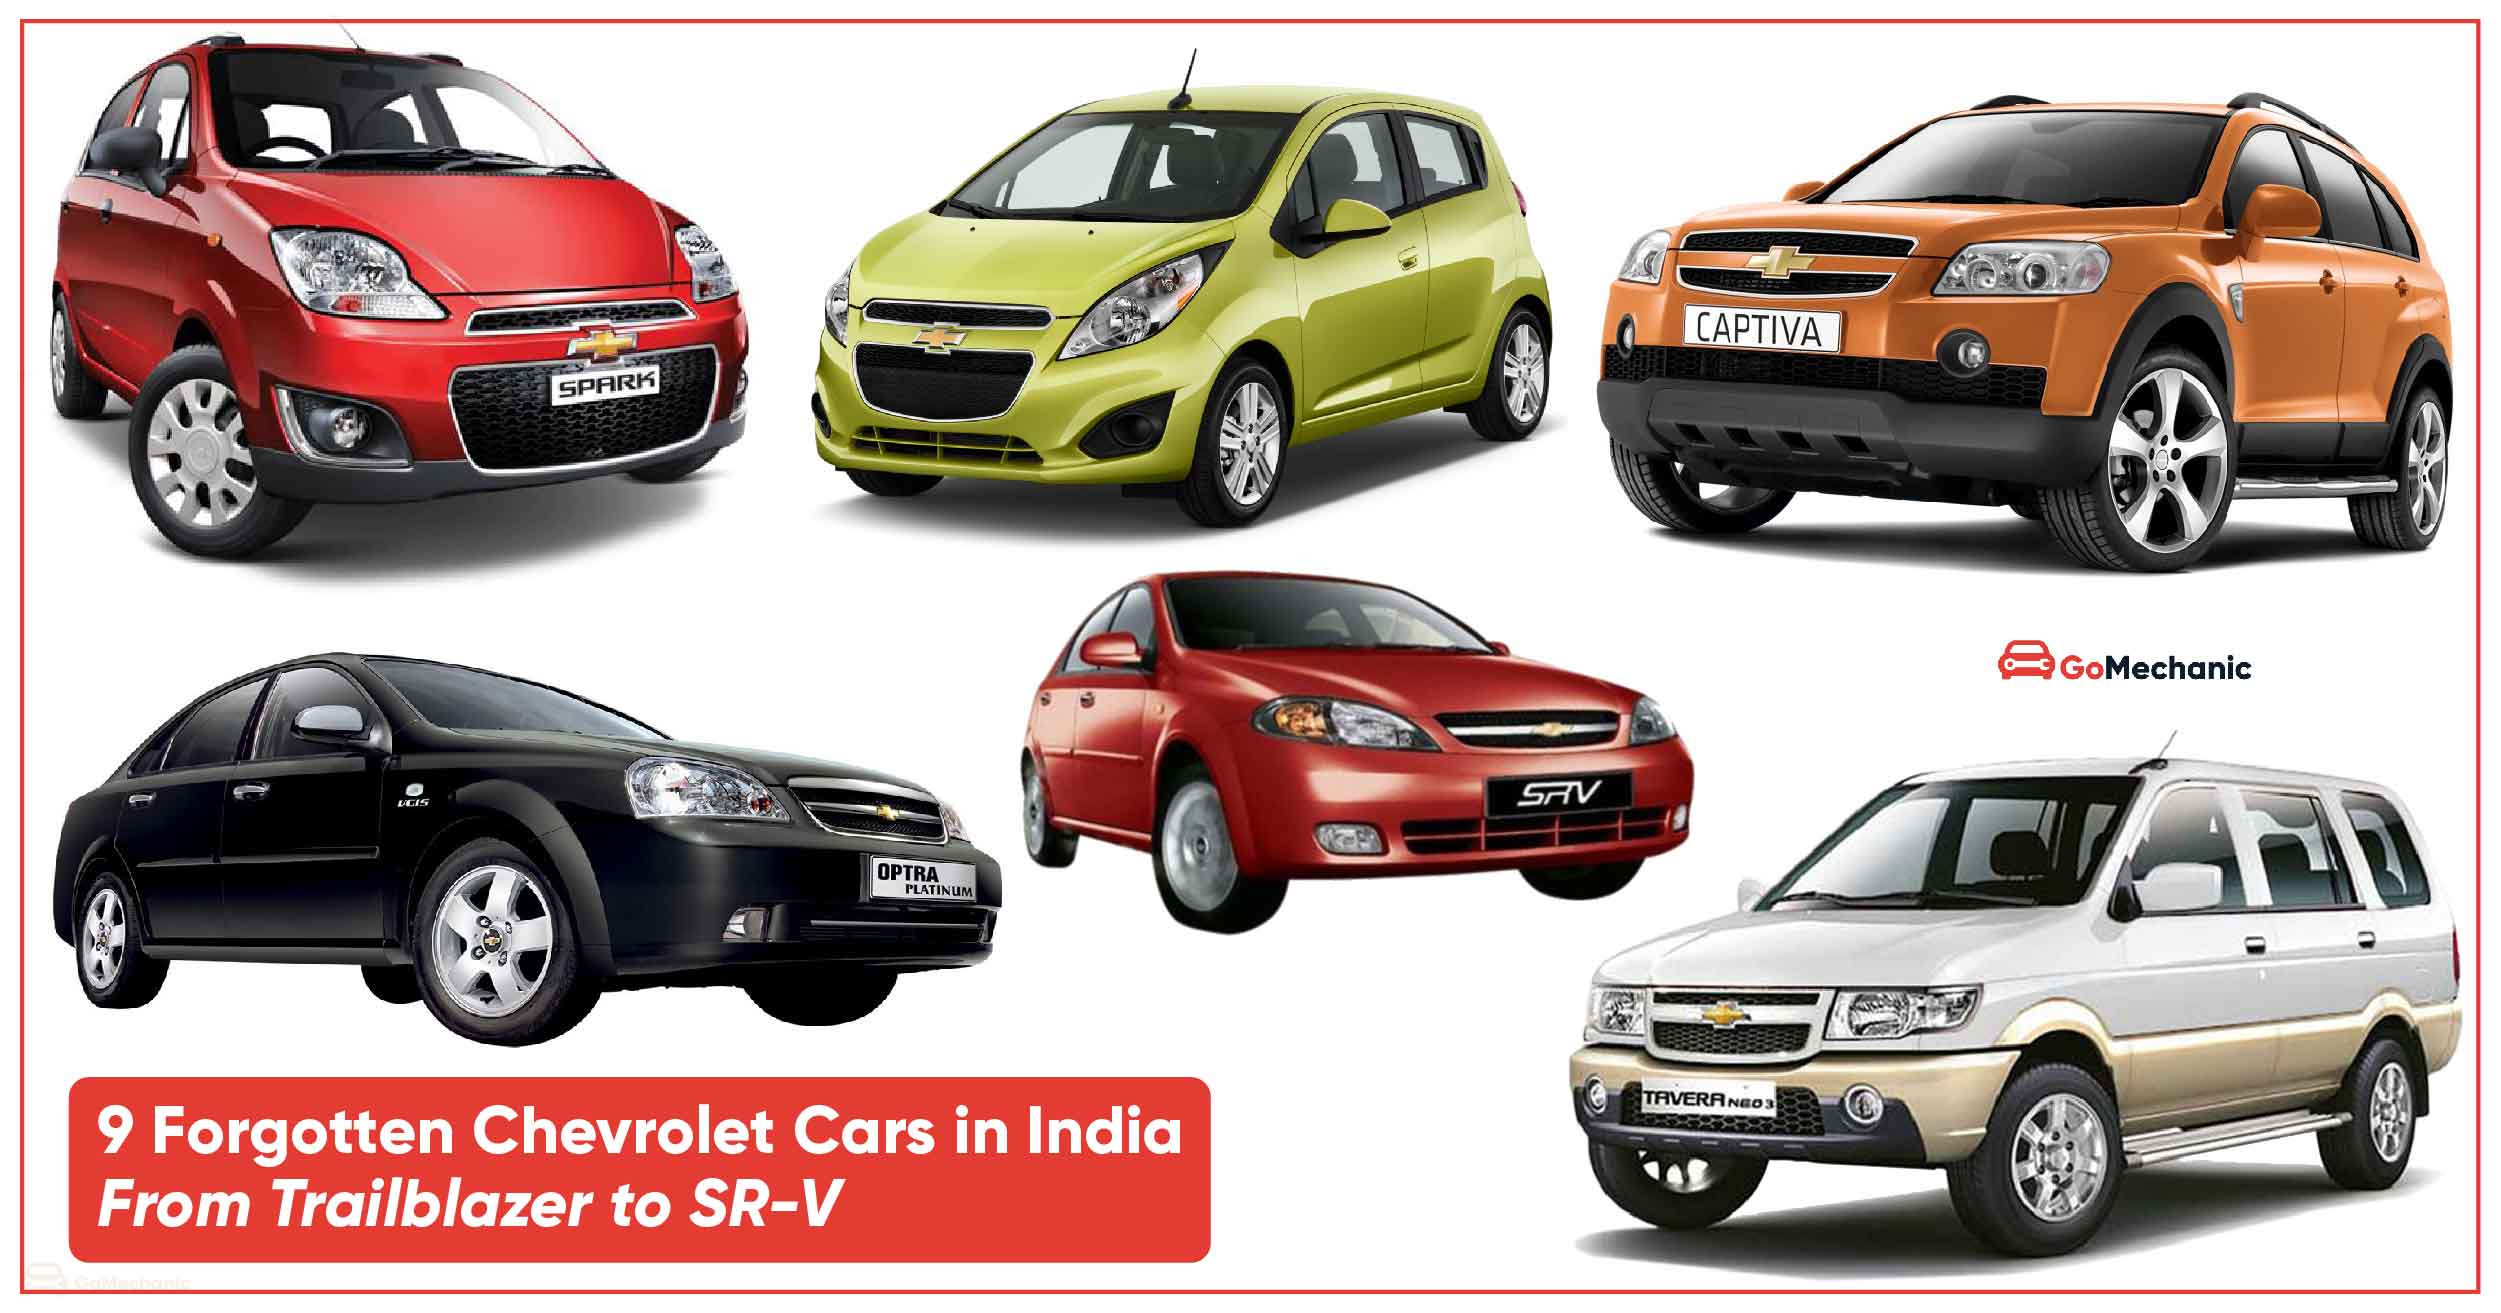 9 Forgotten Chevrolet Cars in India From Trailblazer to SR-V